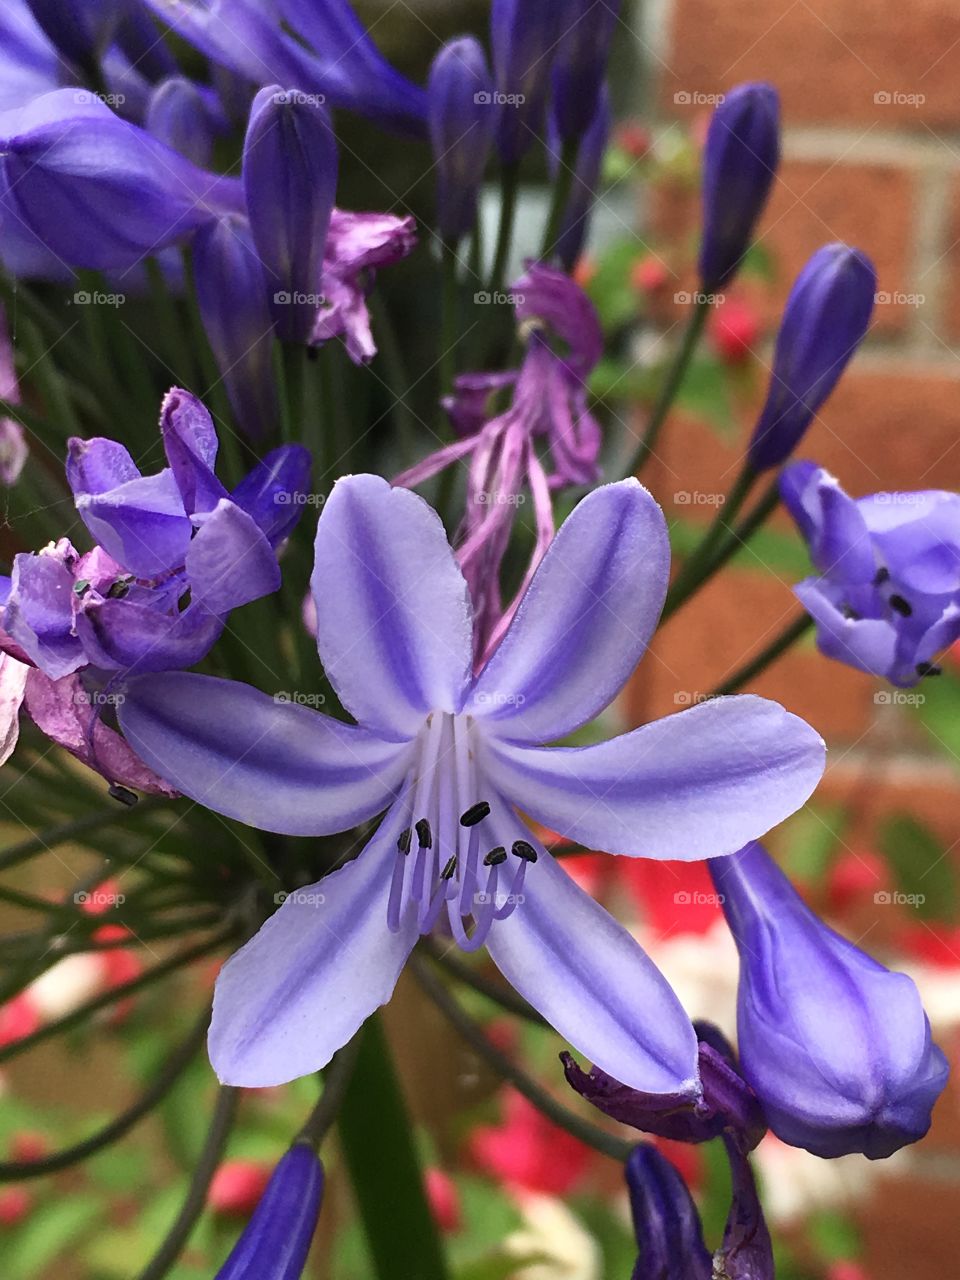 Blue flower macro